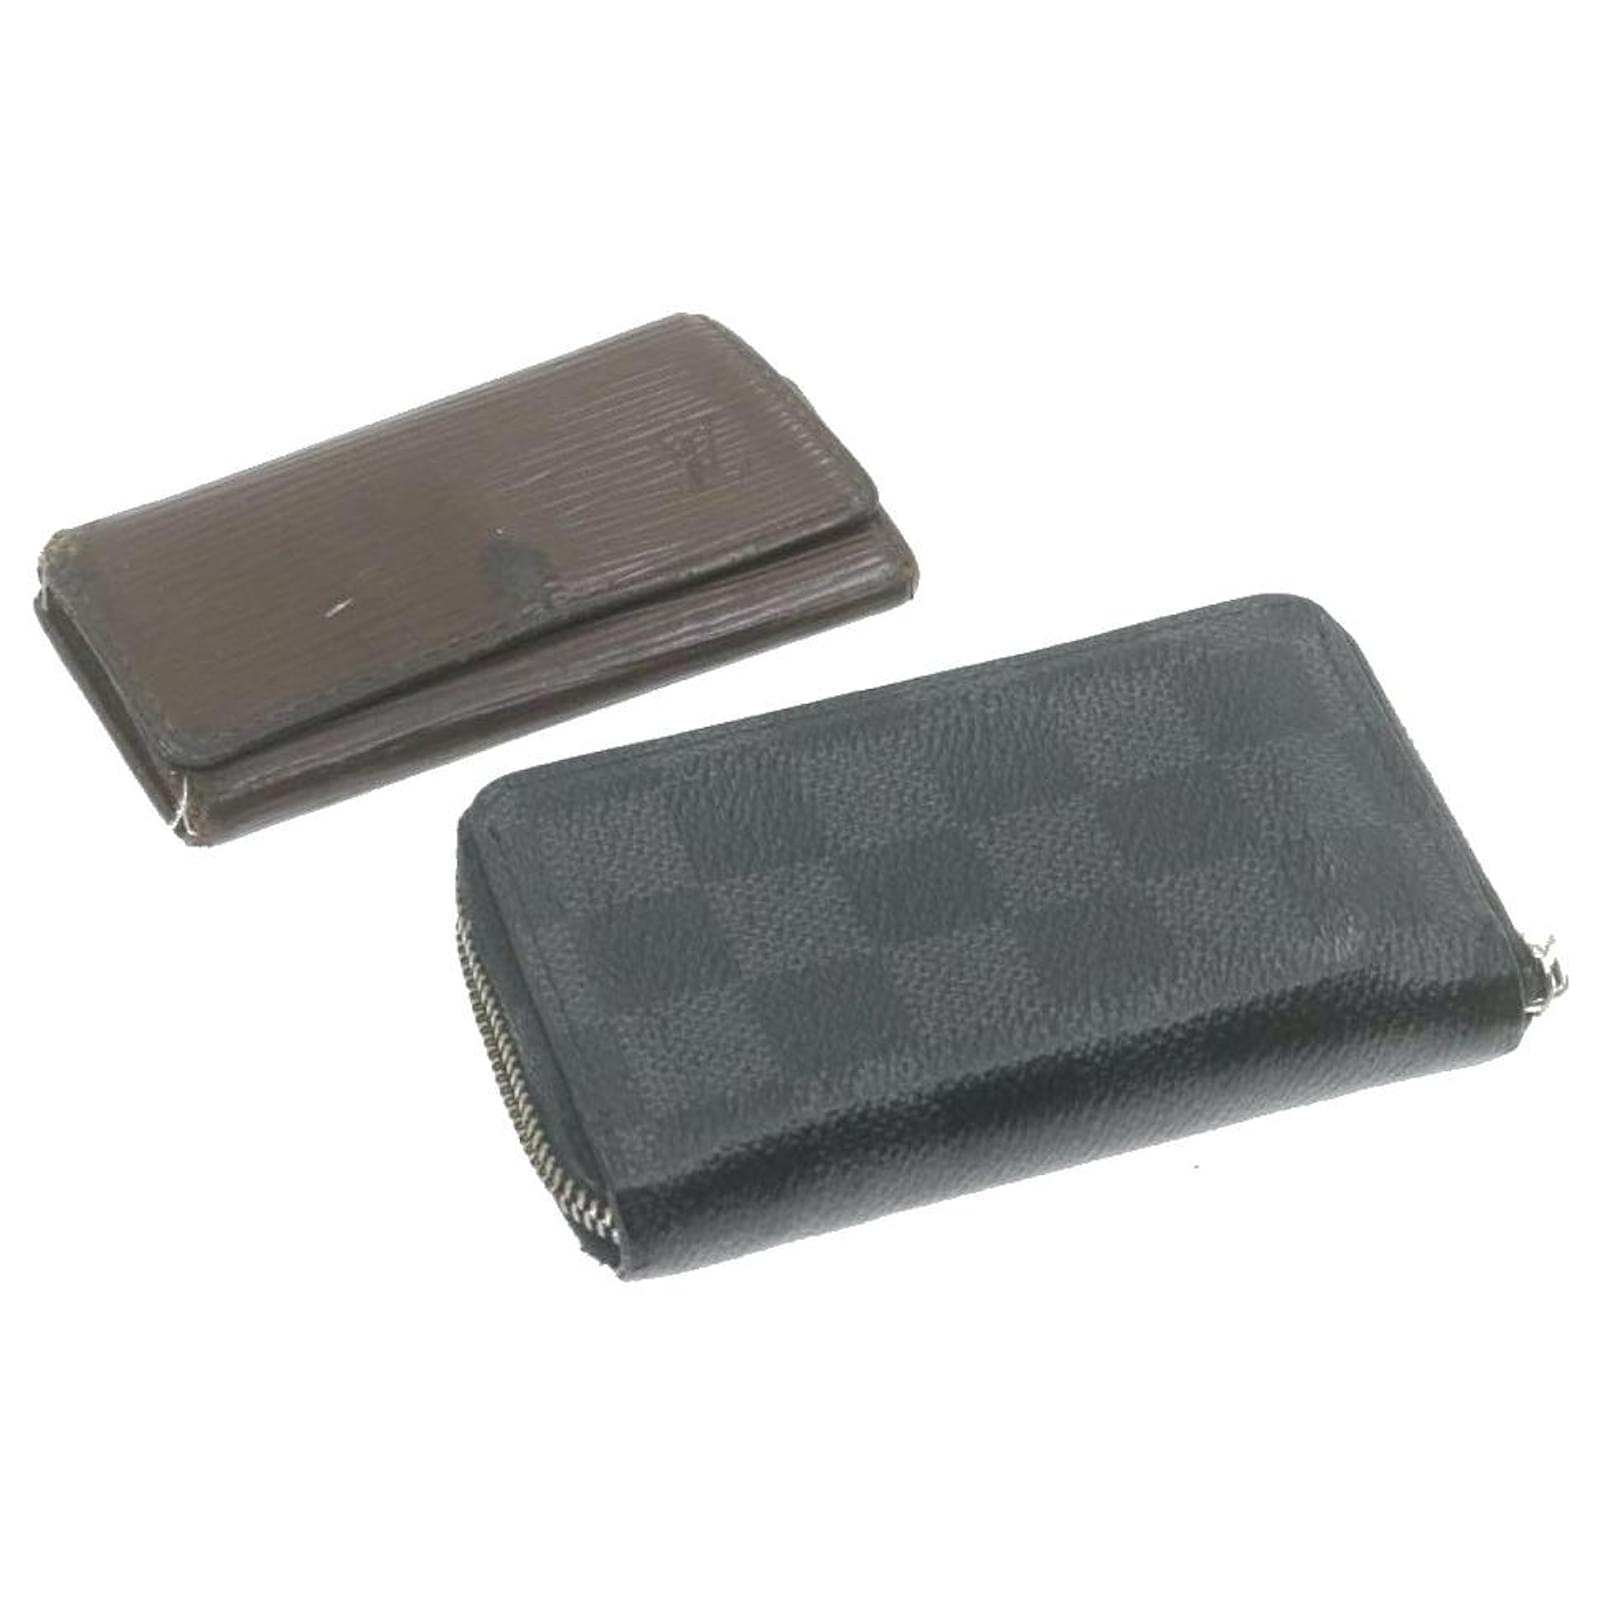 Louis Vuitton Epi Leather Key Holder - Black Wallets, Accessories